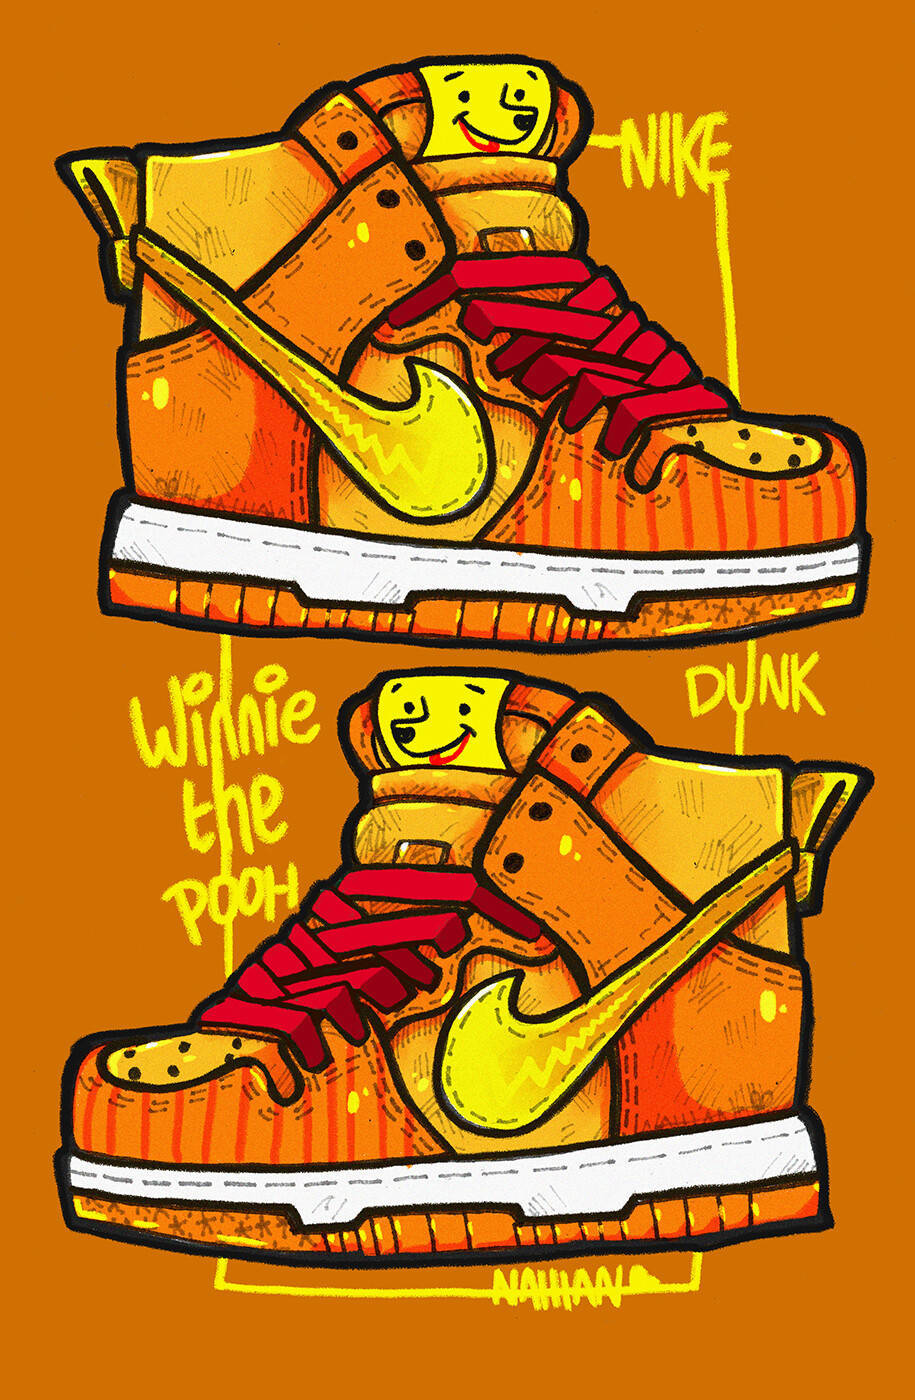 Download Nike Dunk Orange And Yellow Sneakers Wallpaper | Wallpapers.com